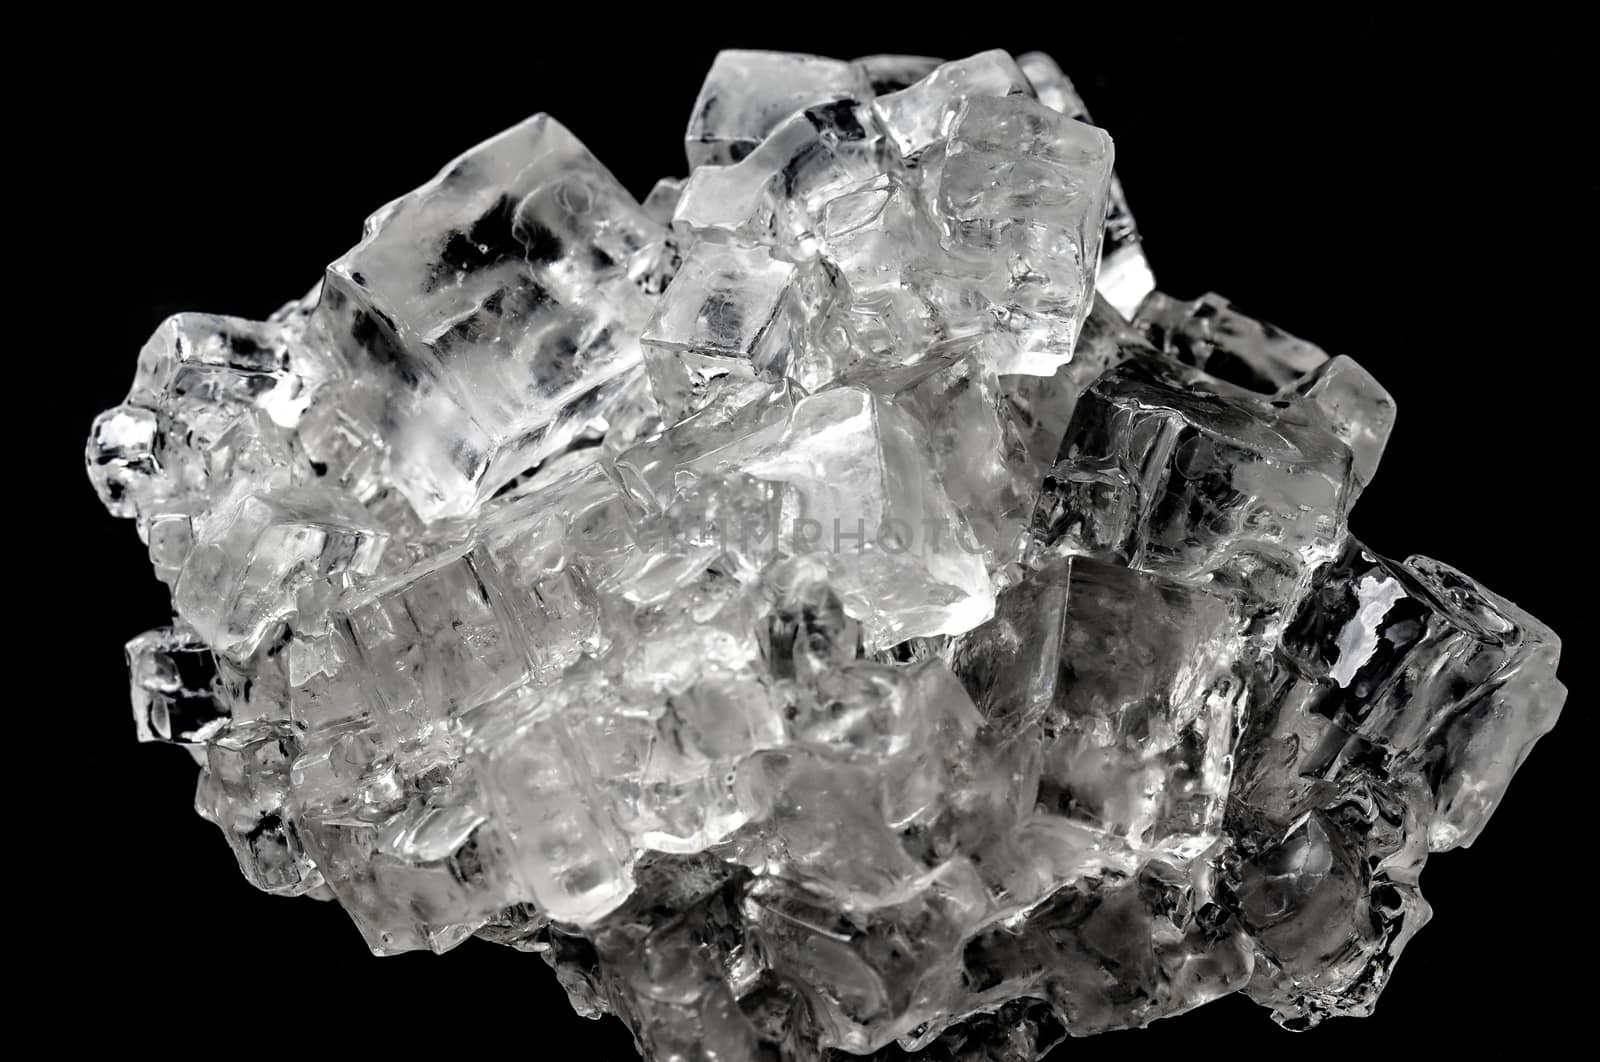 Cubic salt crystal aggregate against black background by geogif